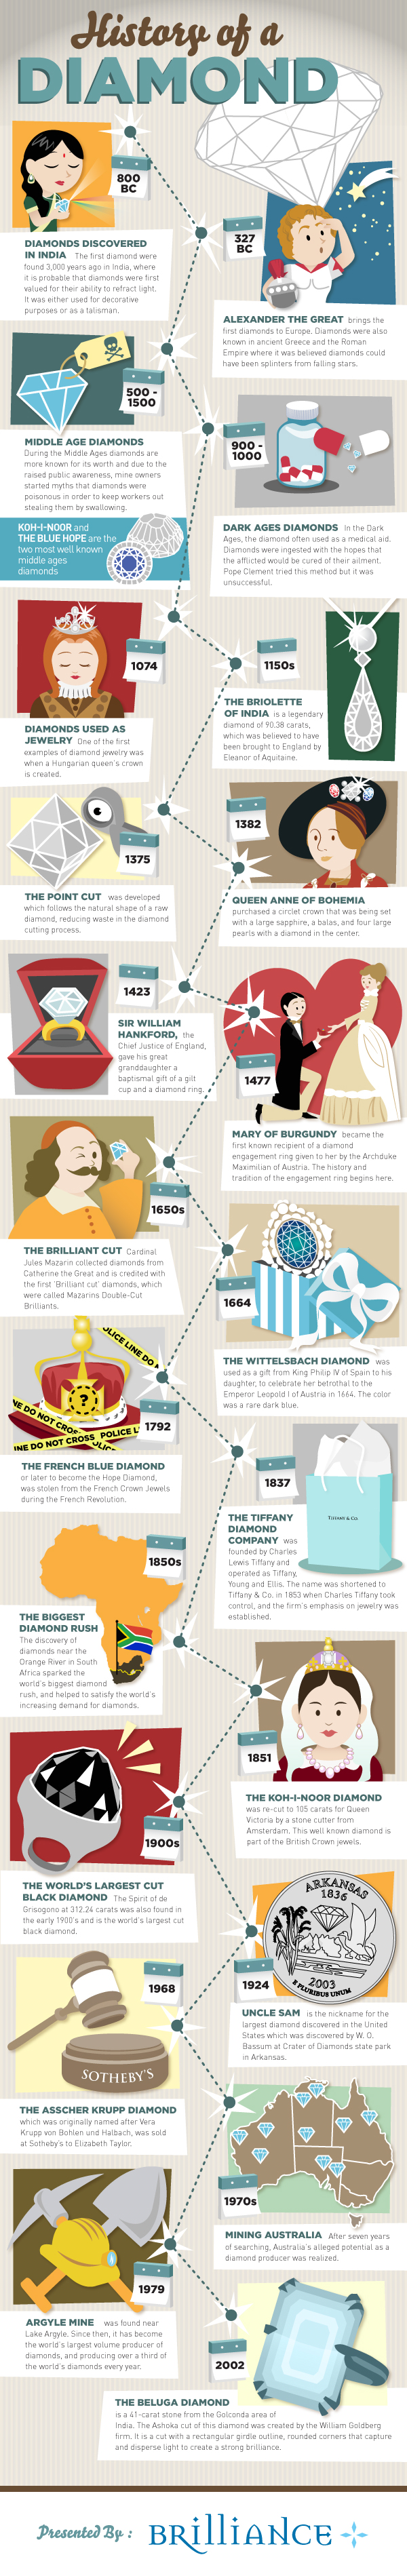 History of a Diamond